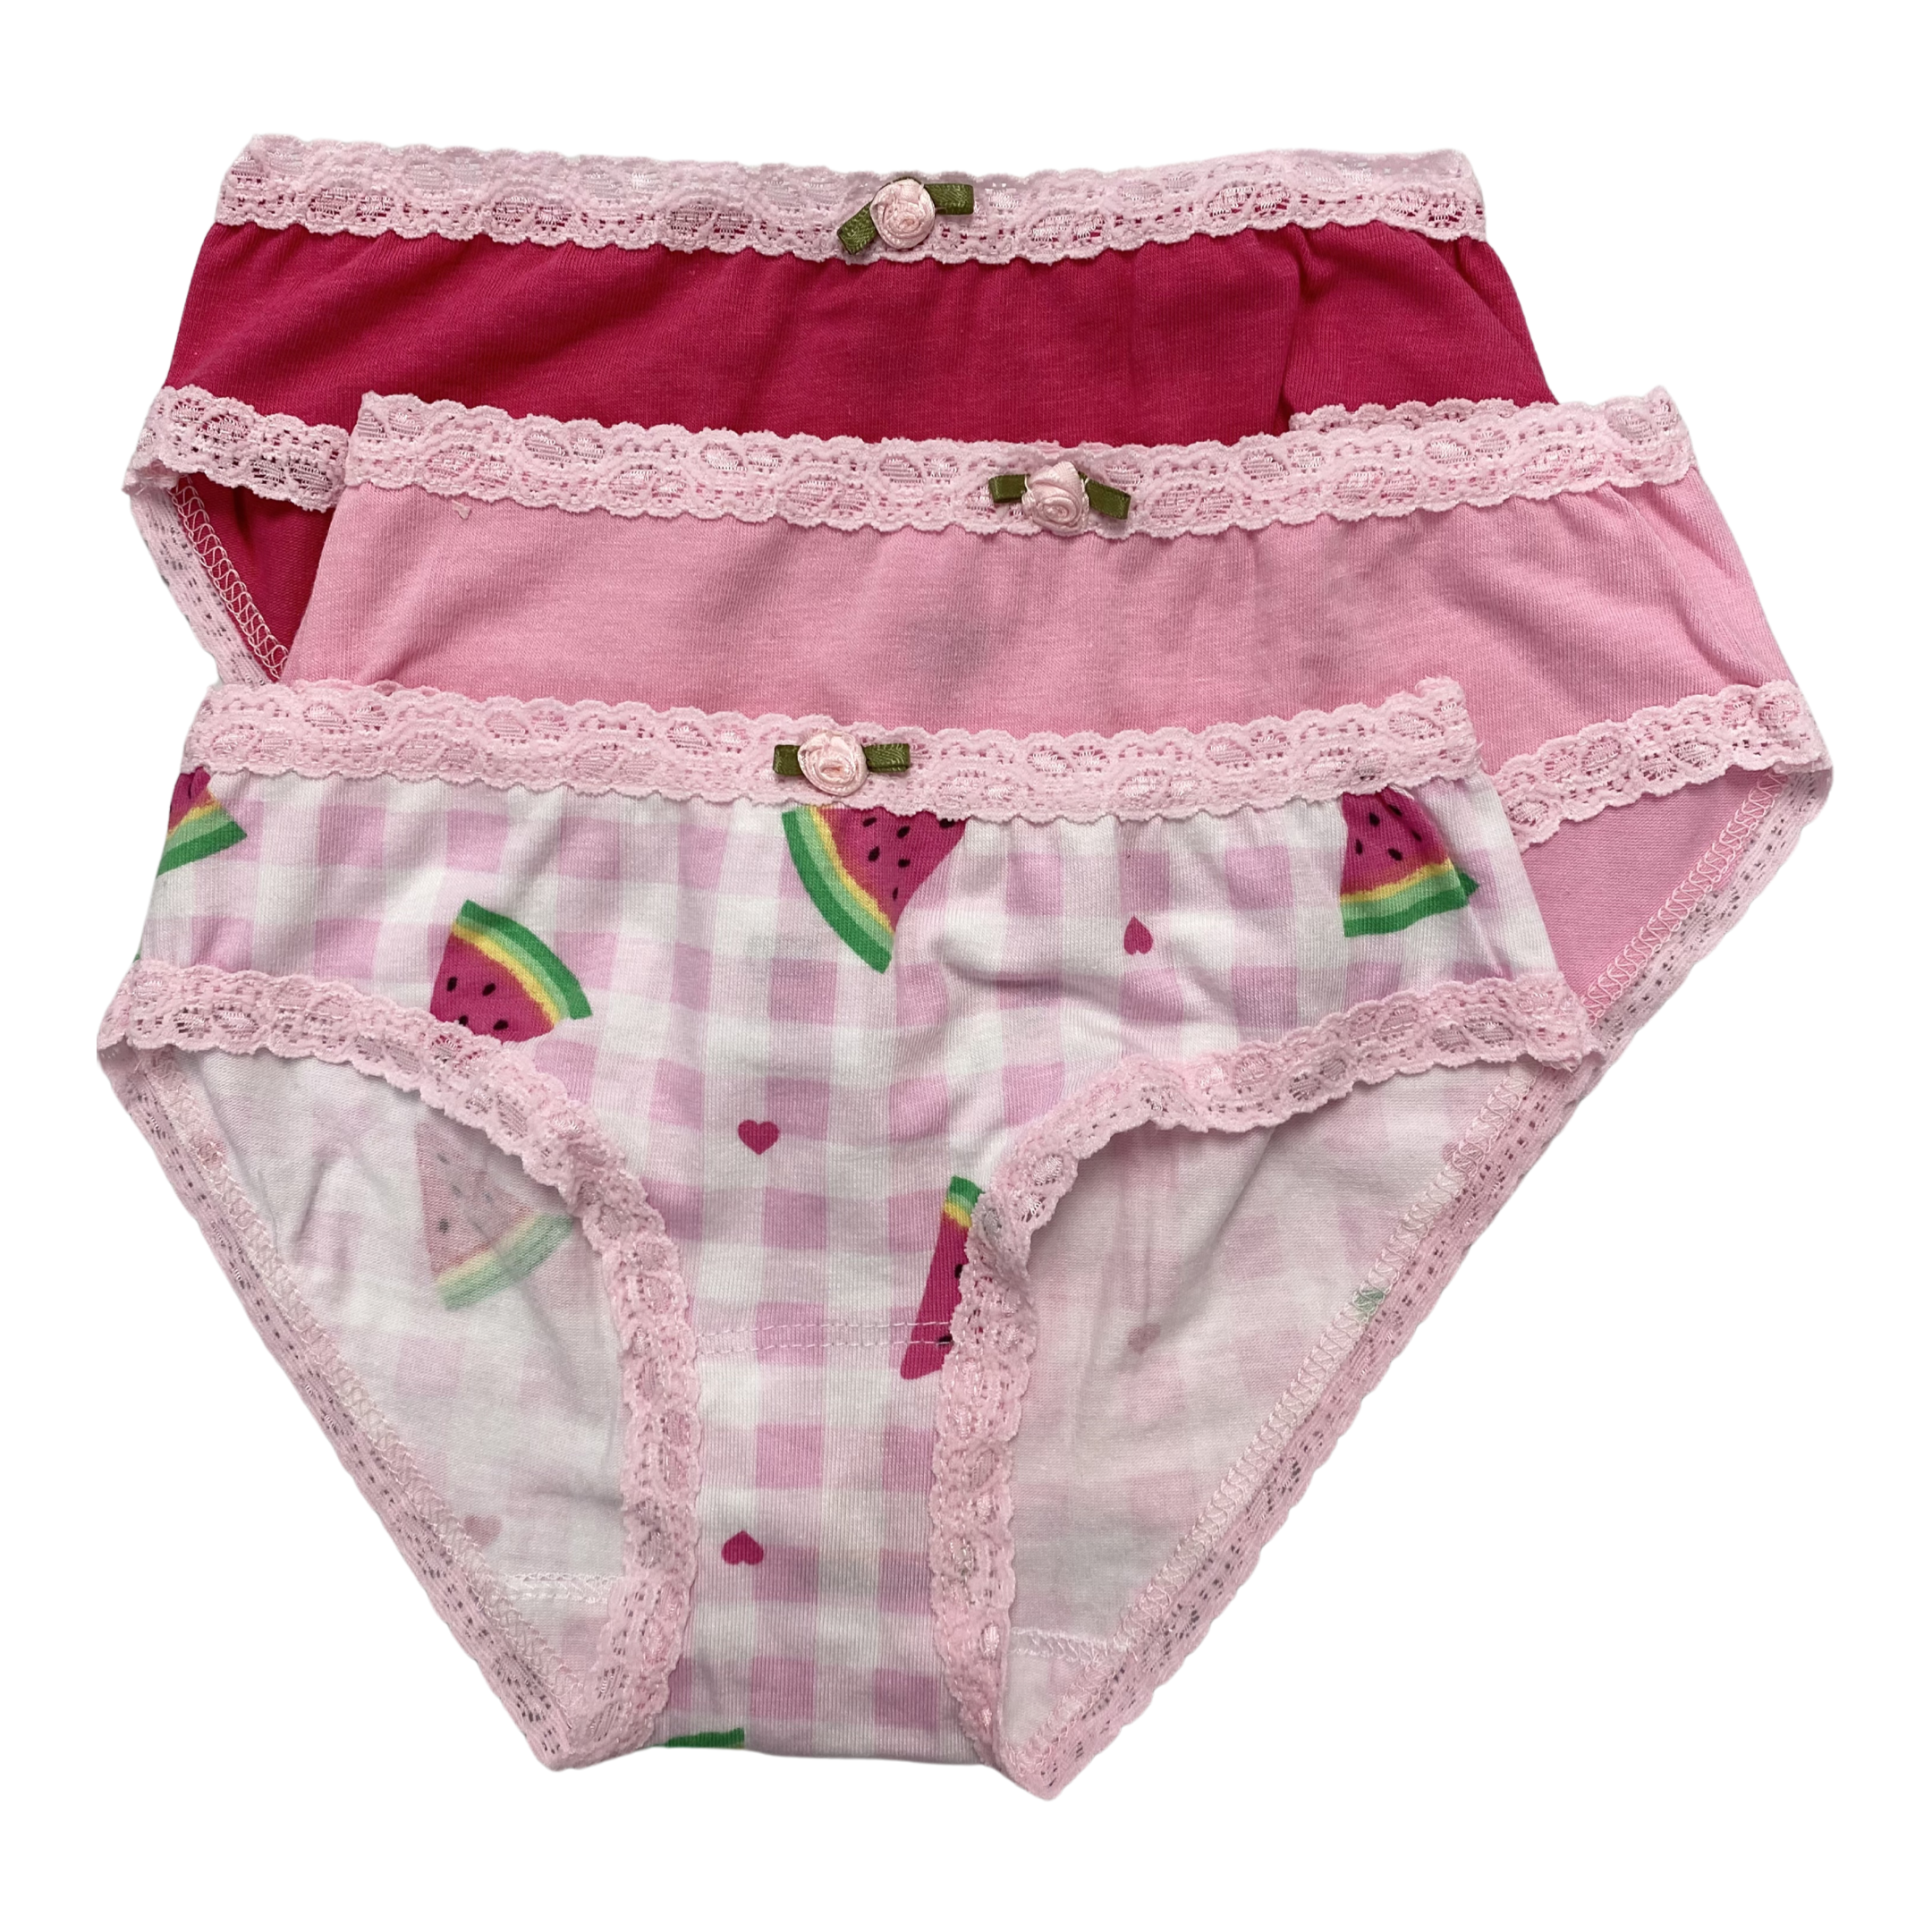  benetia Girls Underwear Children Briefs Kids Panties